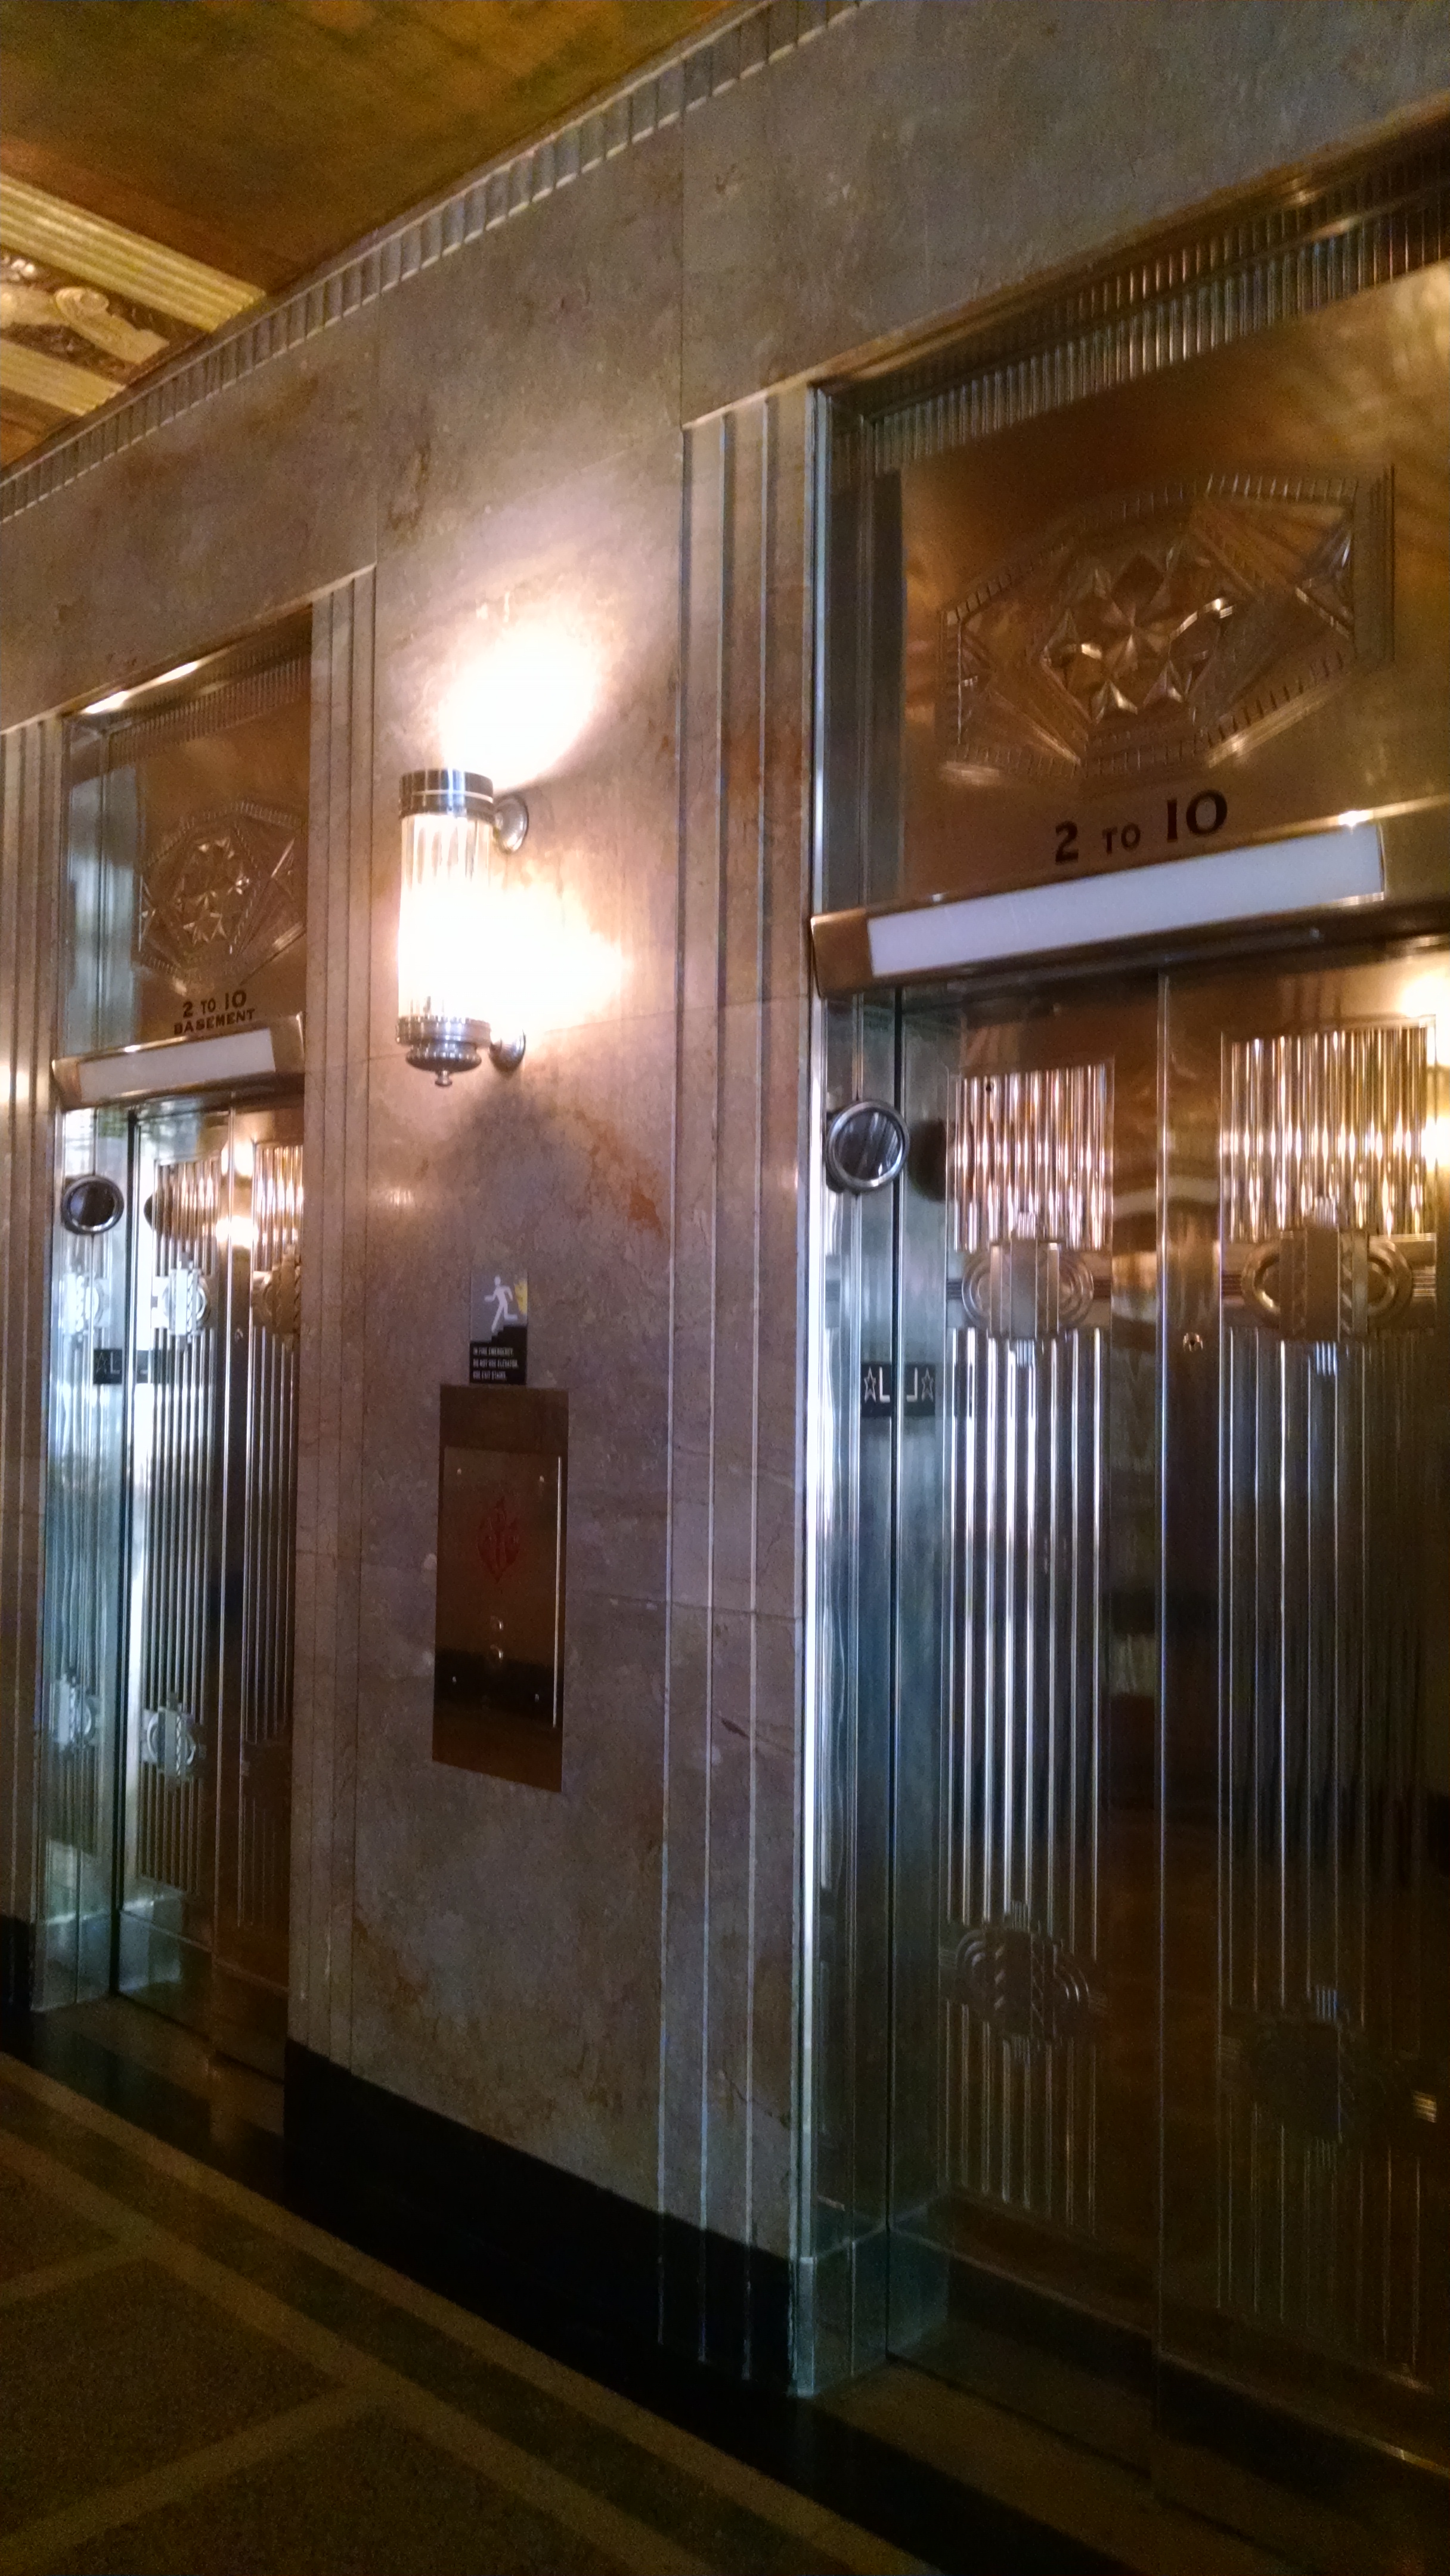 The Kimpton Cardinal Hotel elevator lobby